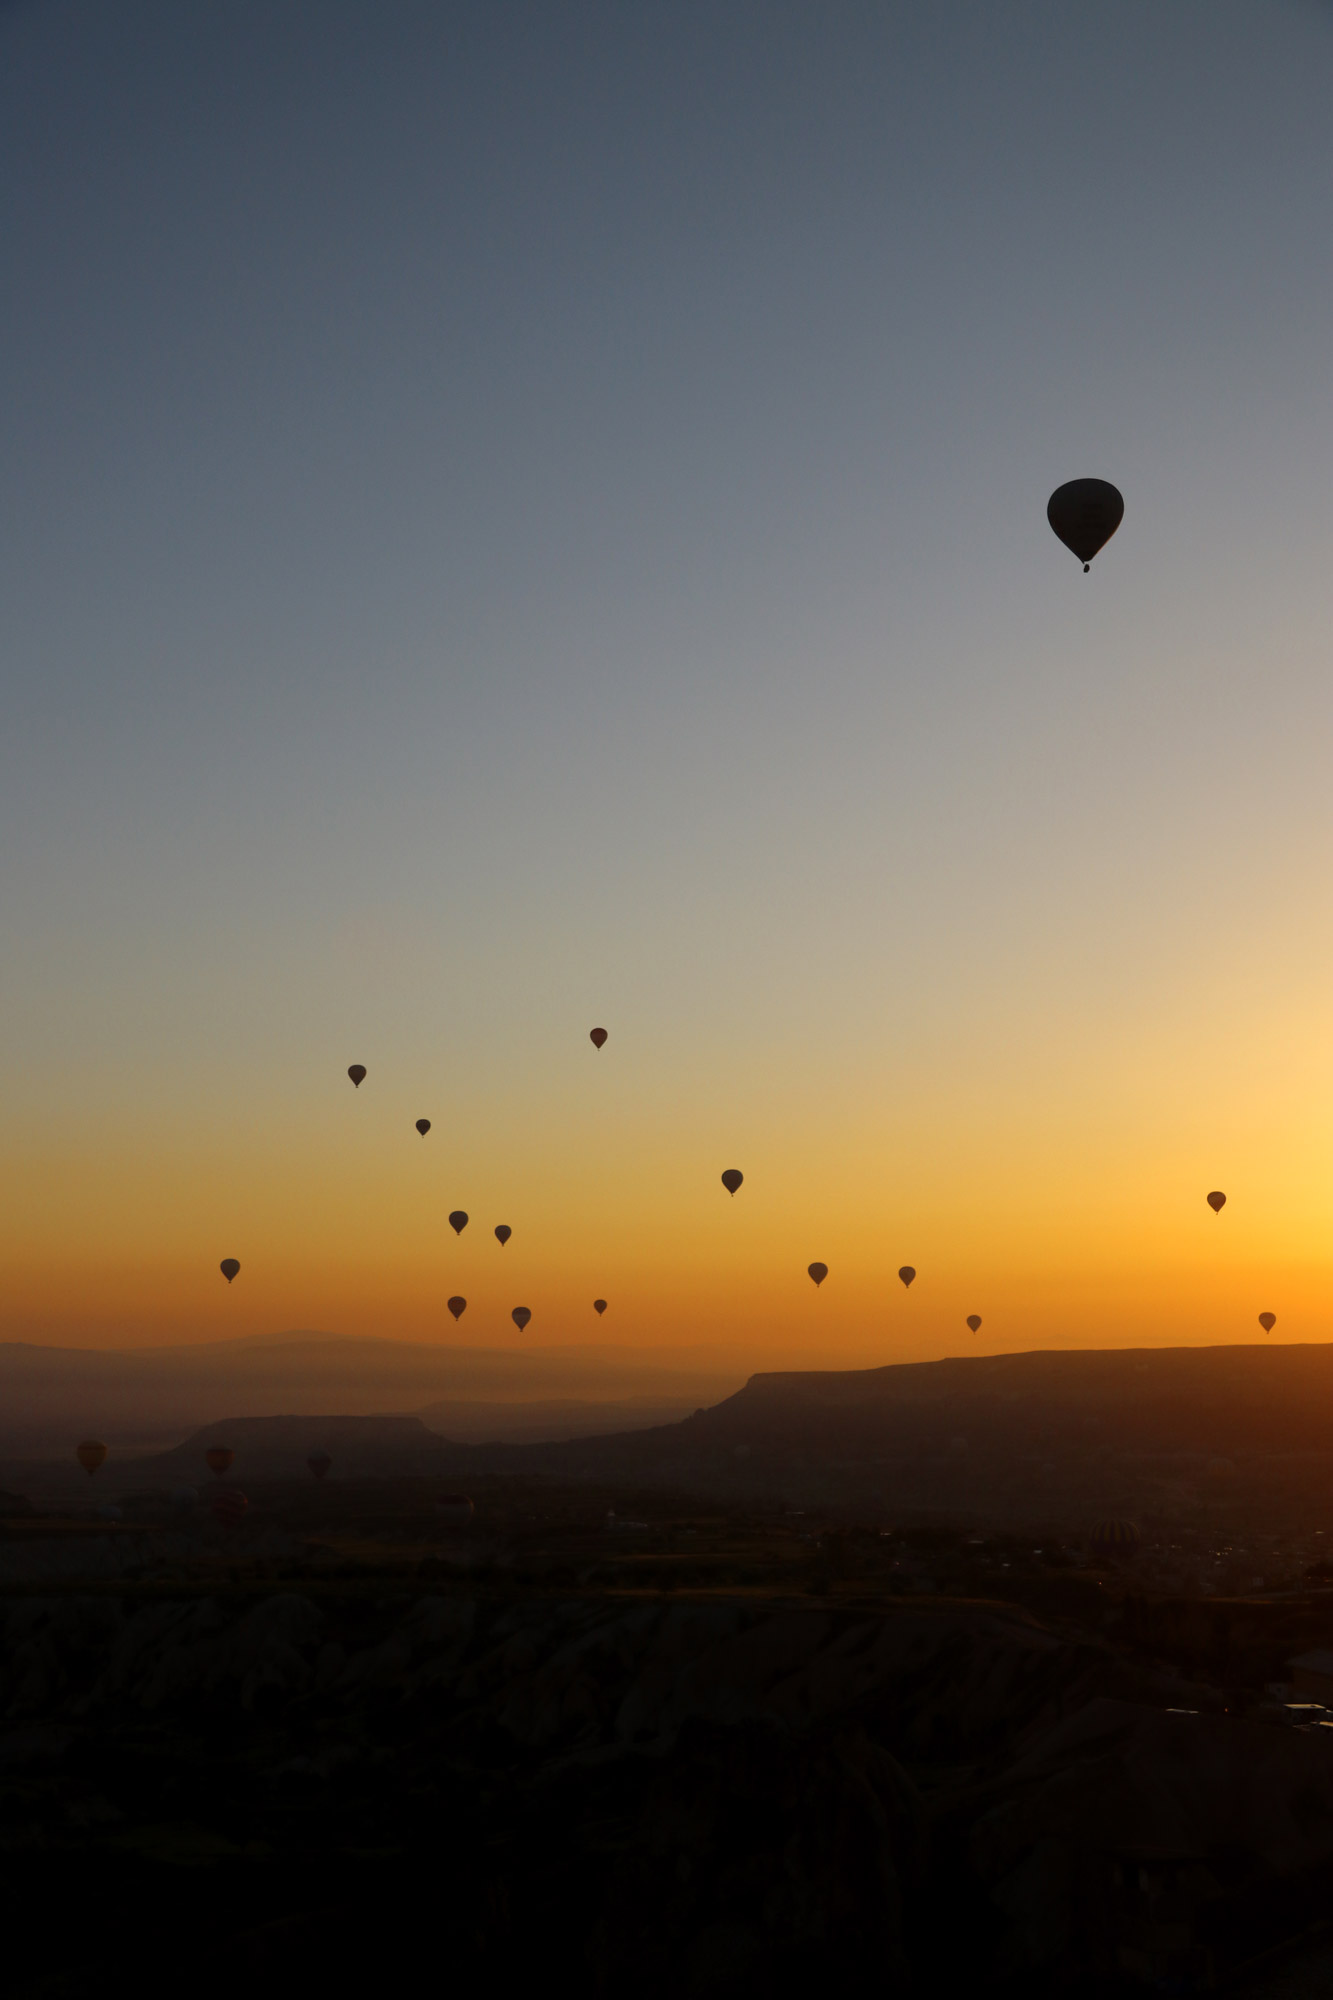 Turkije reisverslag: Laatste dag in Cappadocië - Luchtballonnen boven Cappadocië